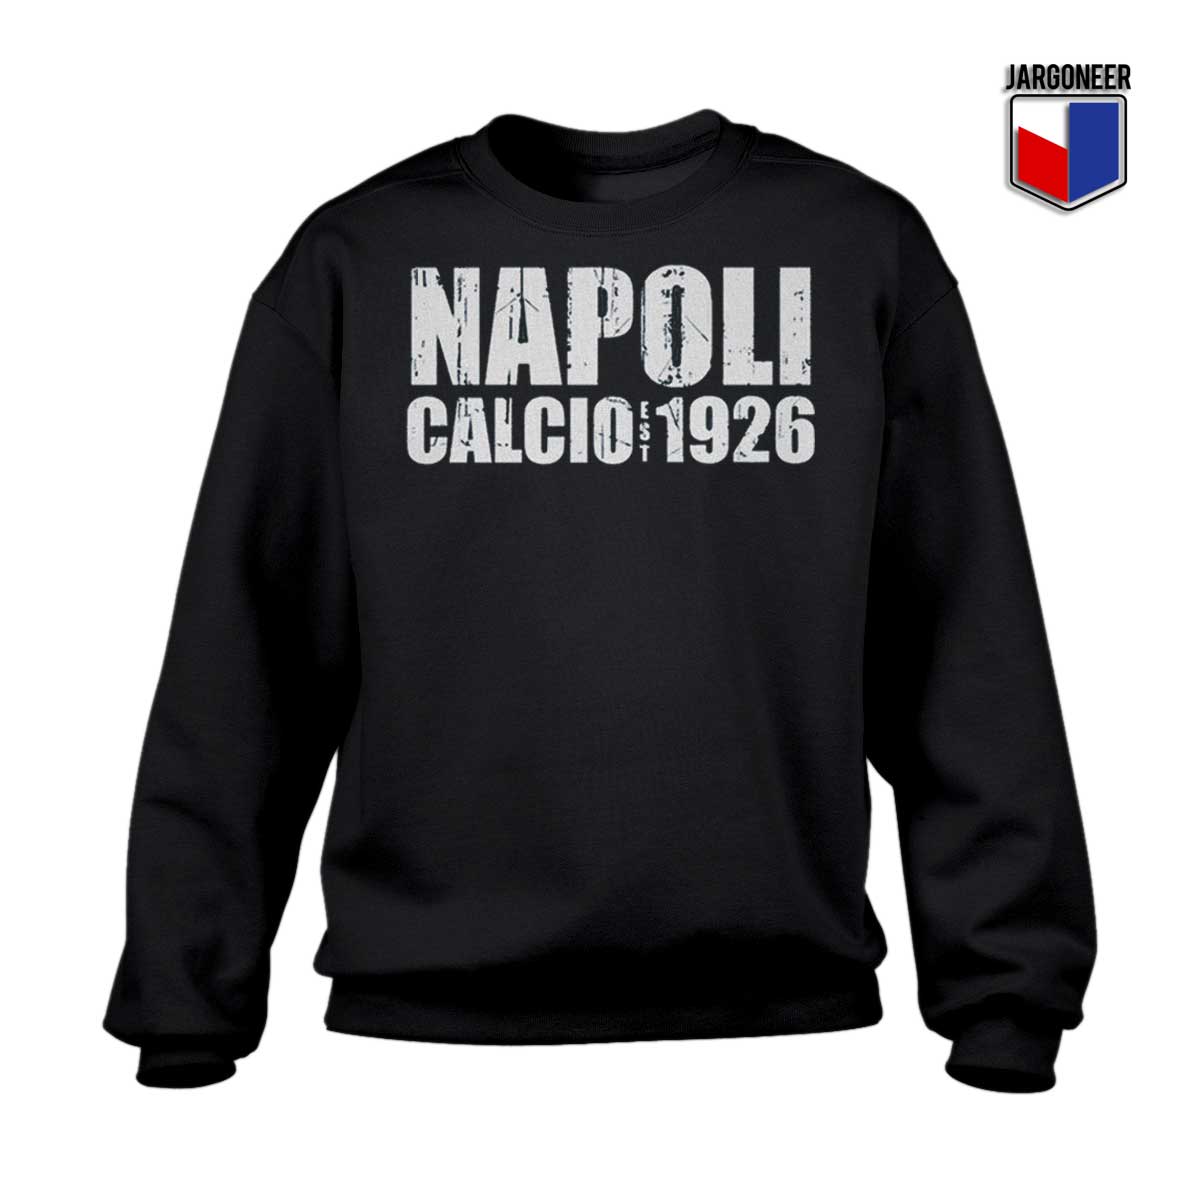 Napoli Calcio Est 1926 Sweatshirt - Shop Unique Graphic Cool Shirt Designs